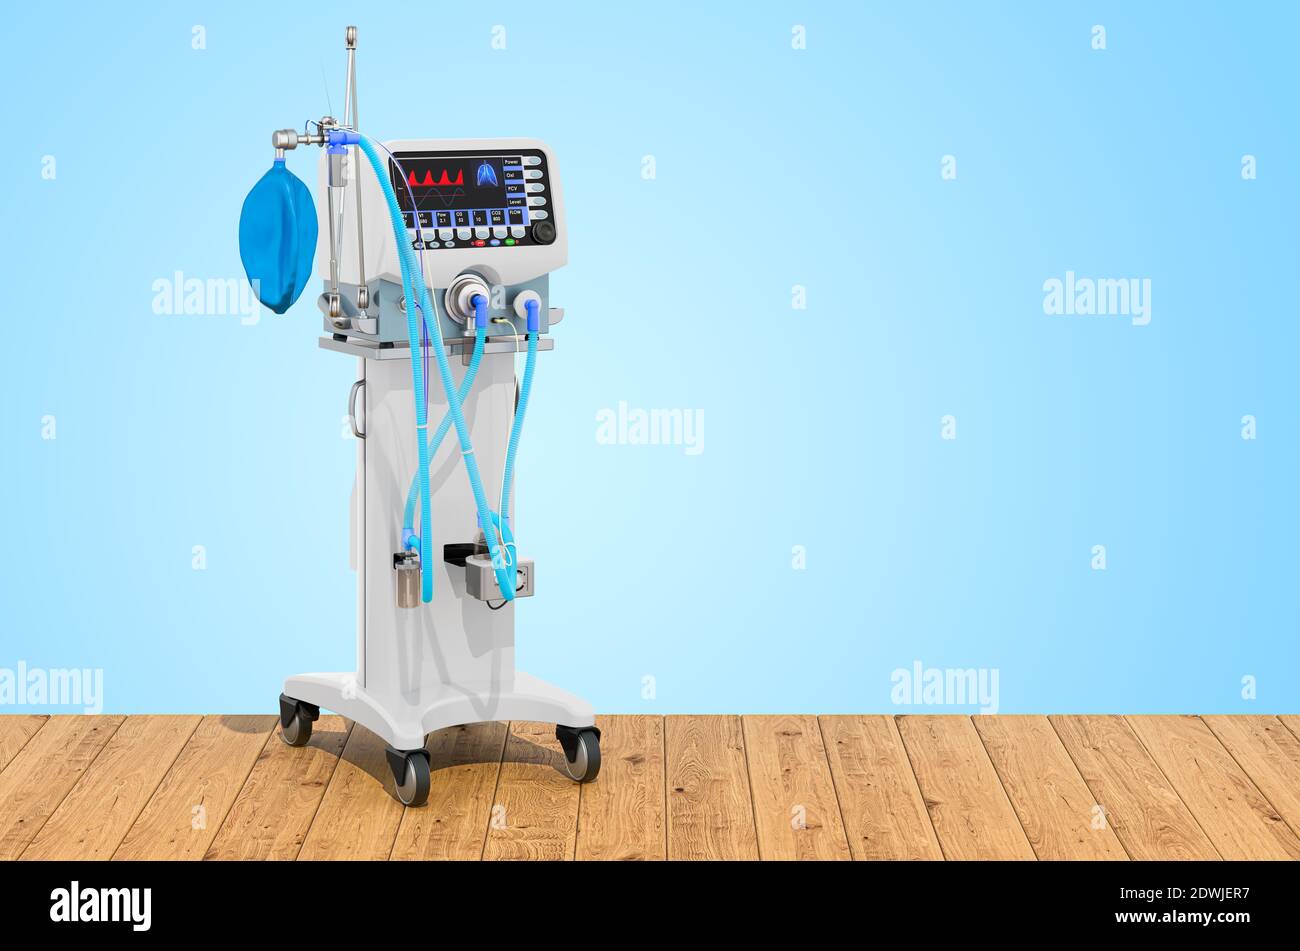 Medical ventilator on the wooden planks, 3D rendering Stock Photo